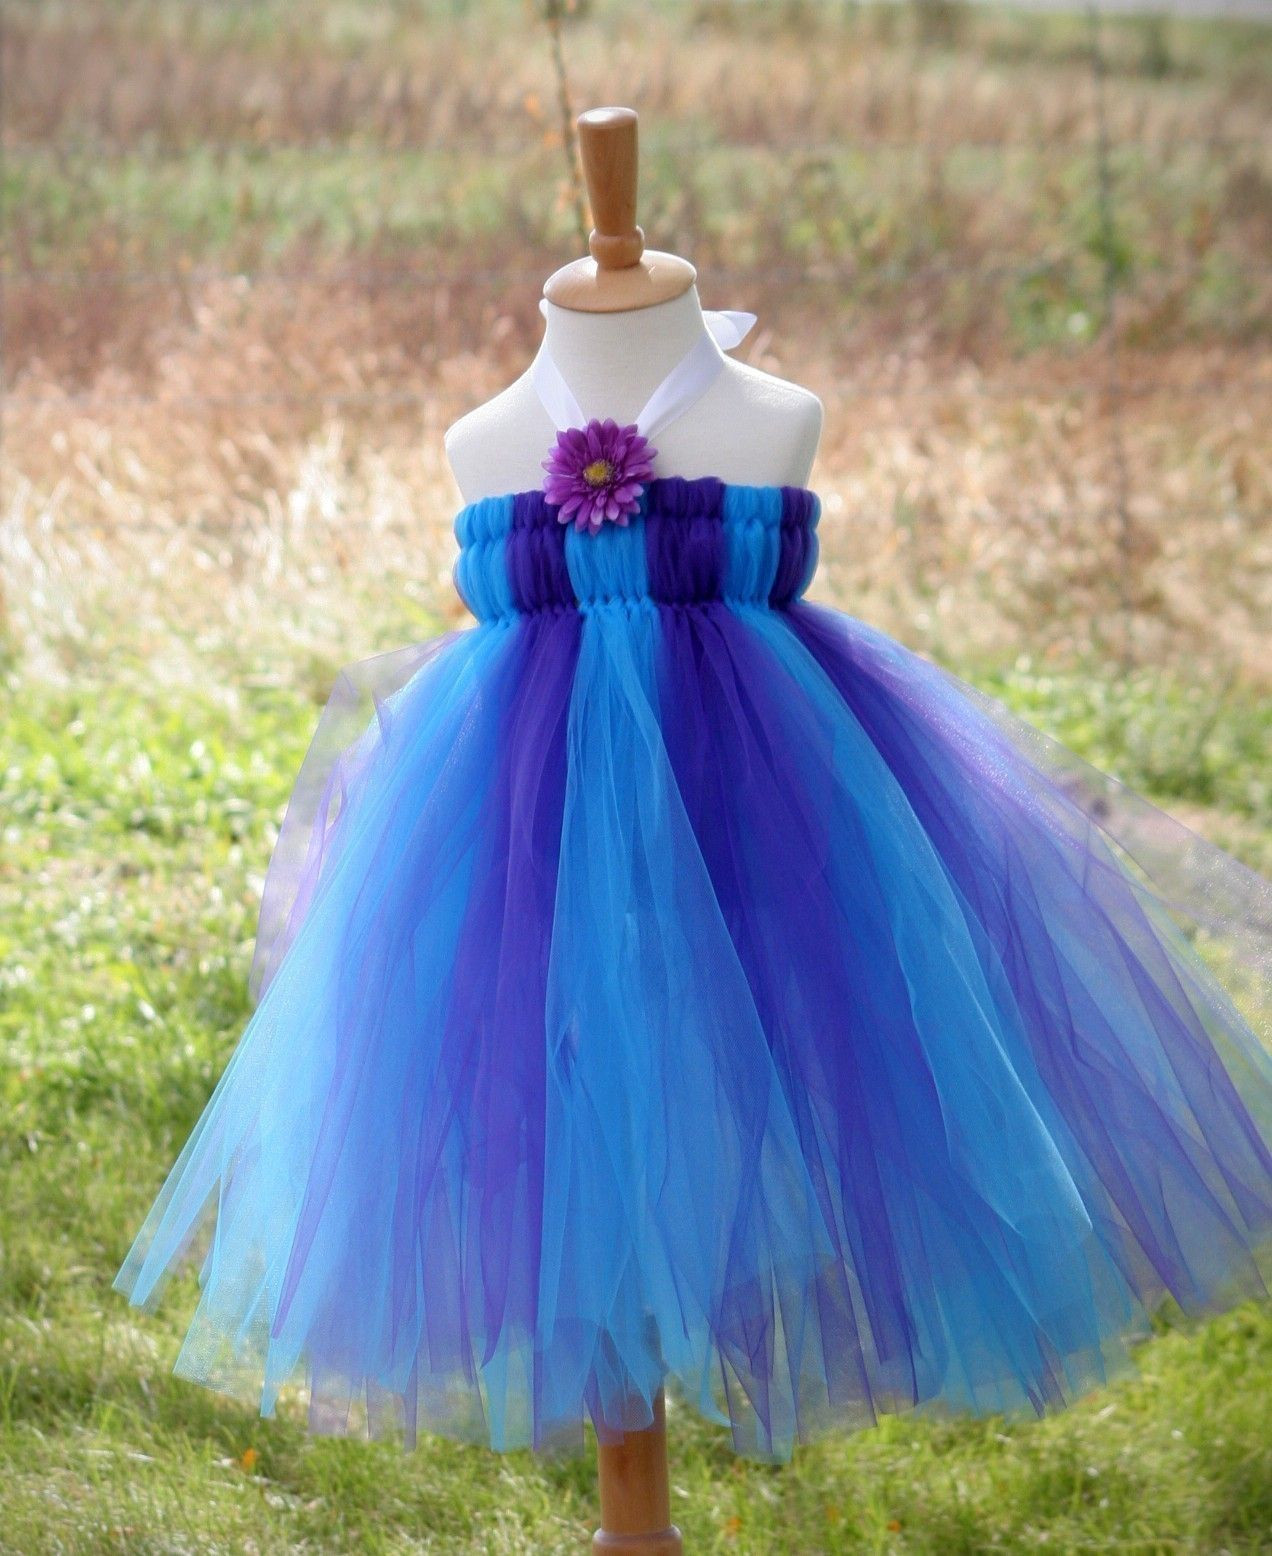 Tulle Dress Toddler DIY
 Tutus on Pinterest